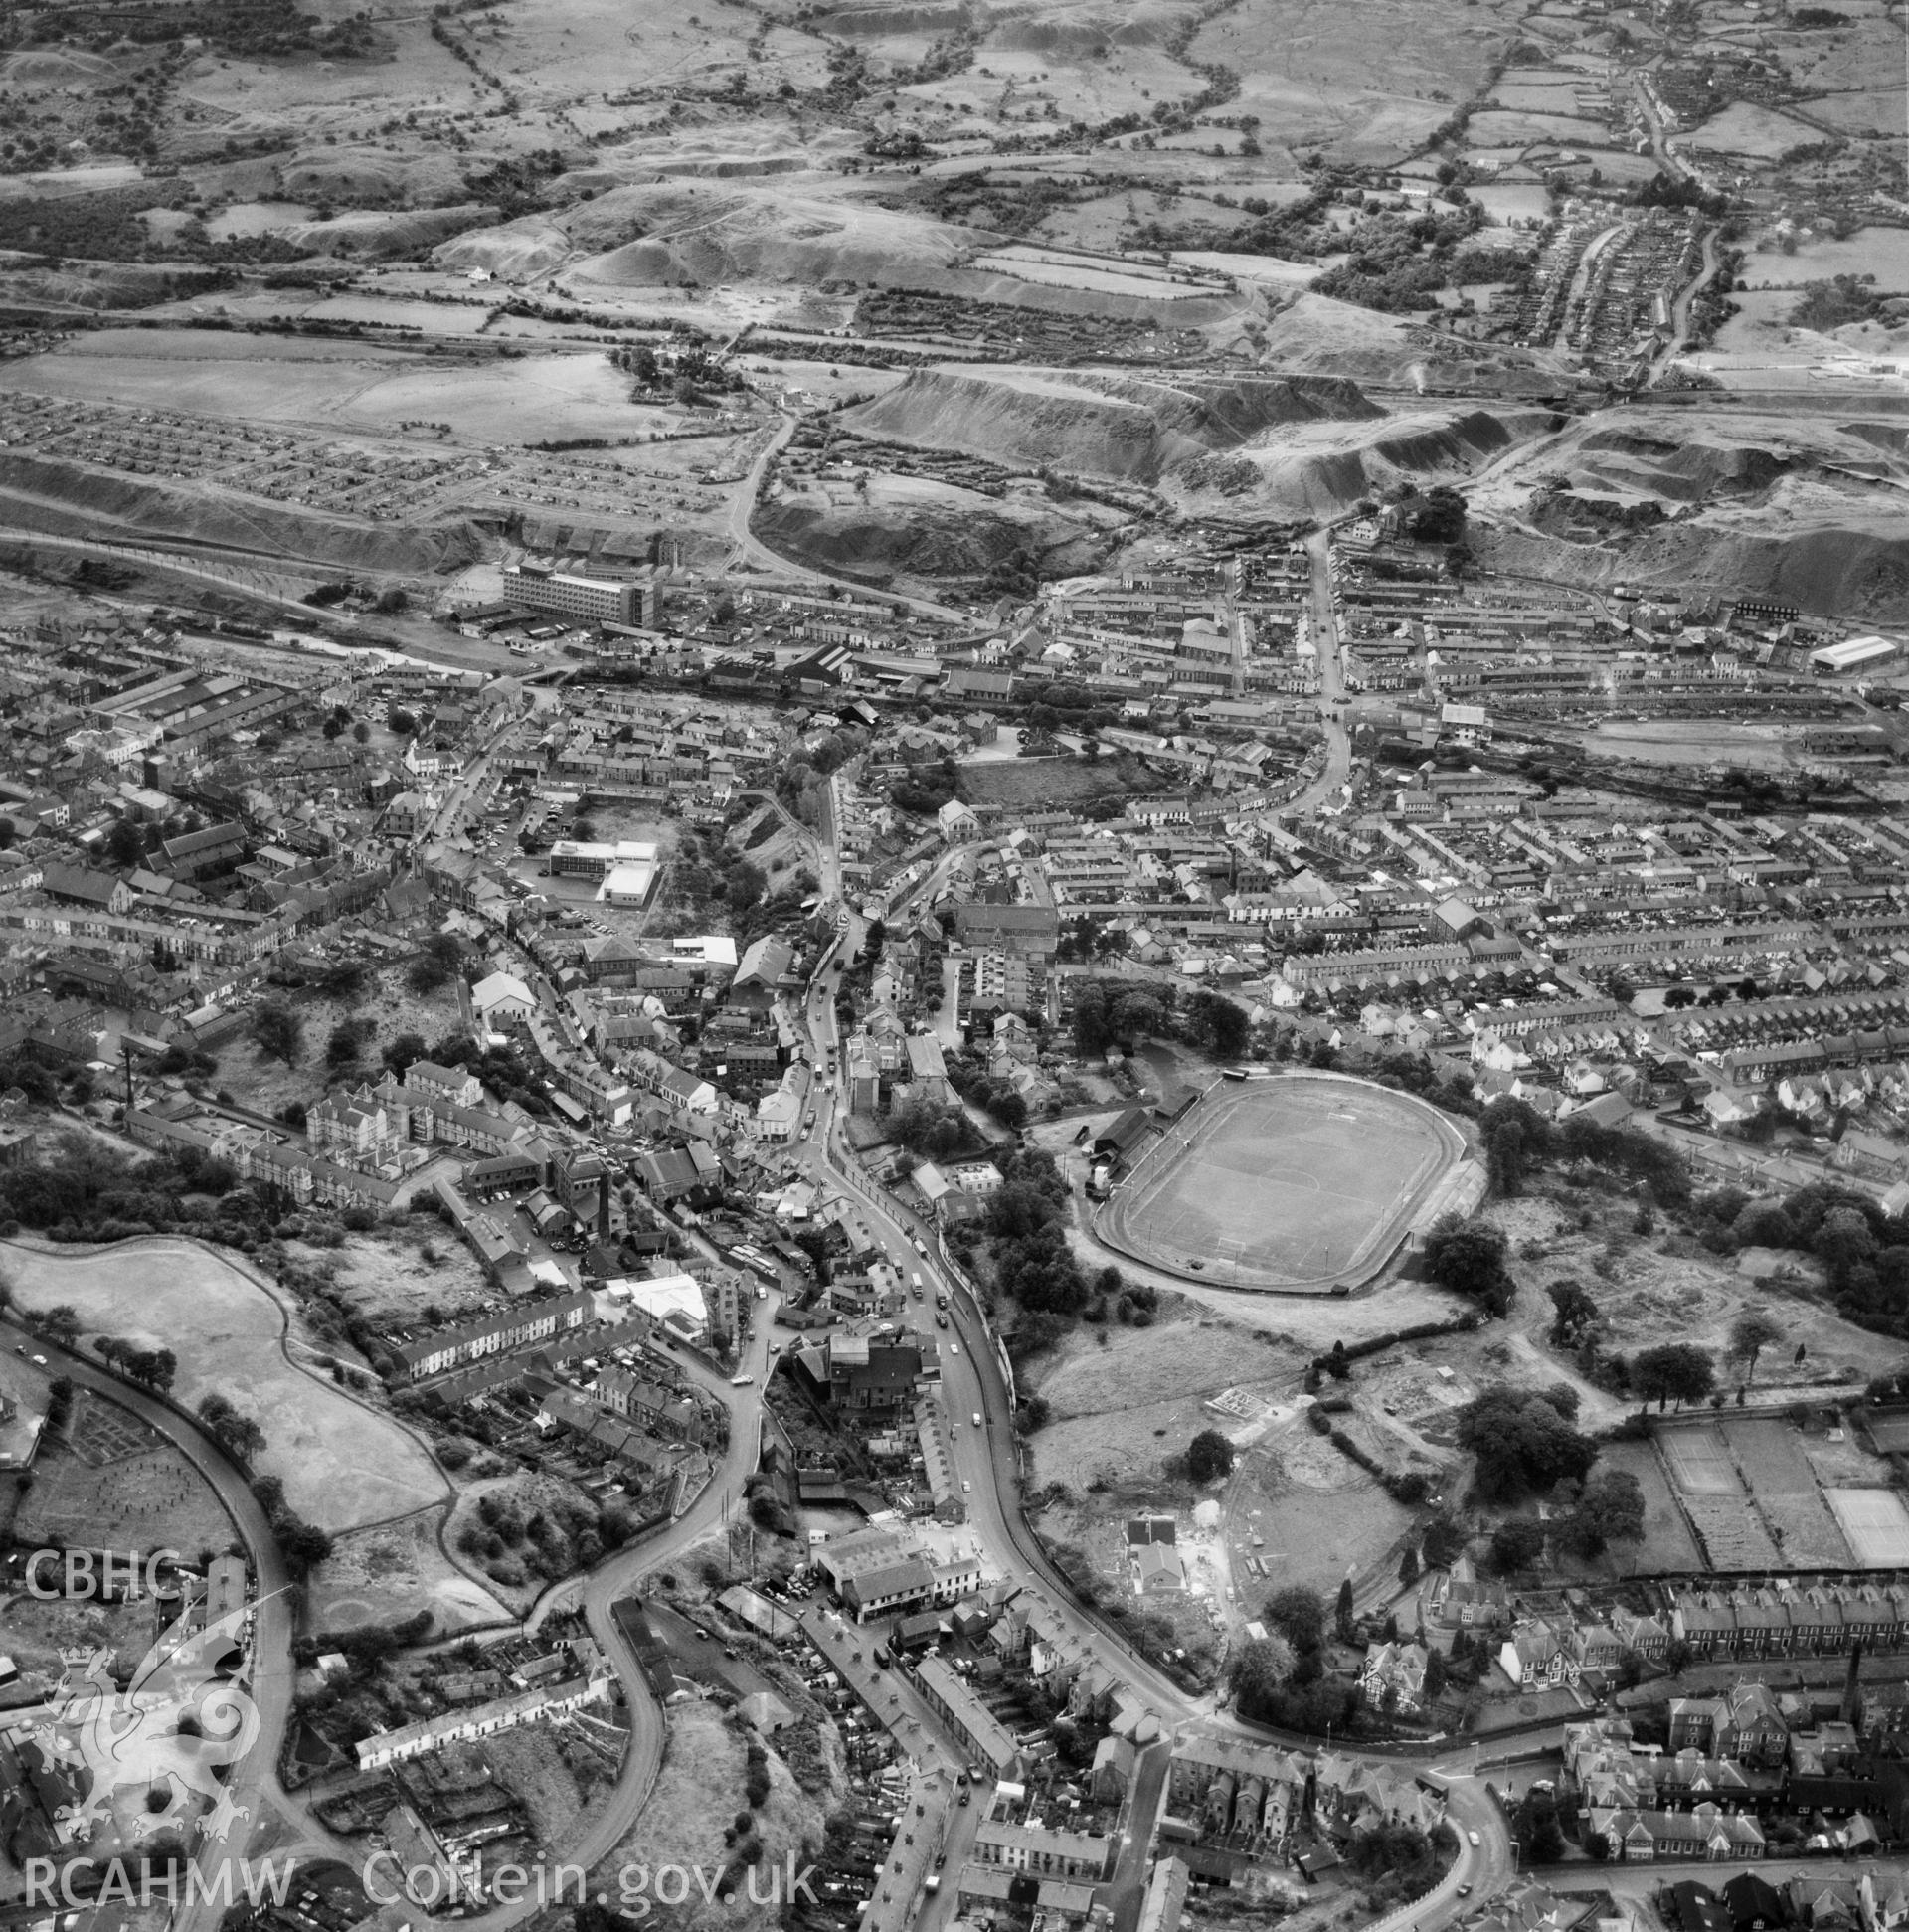 Digital copy of a black and white oblique aerial photograph showing Penydarren Park, Merthyr Tydfil, taken by Aerofilms Ltd, 1959.